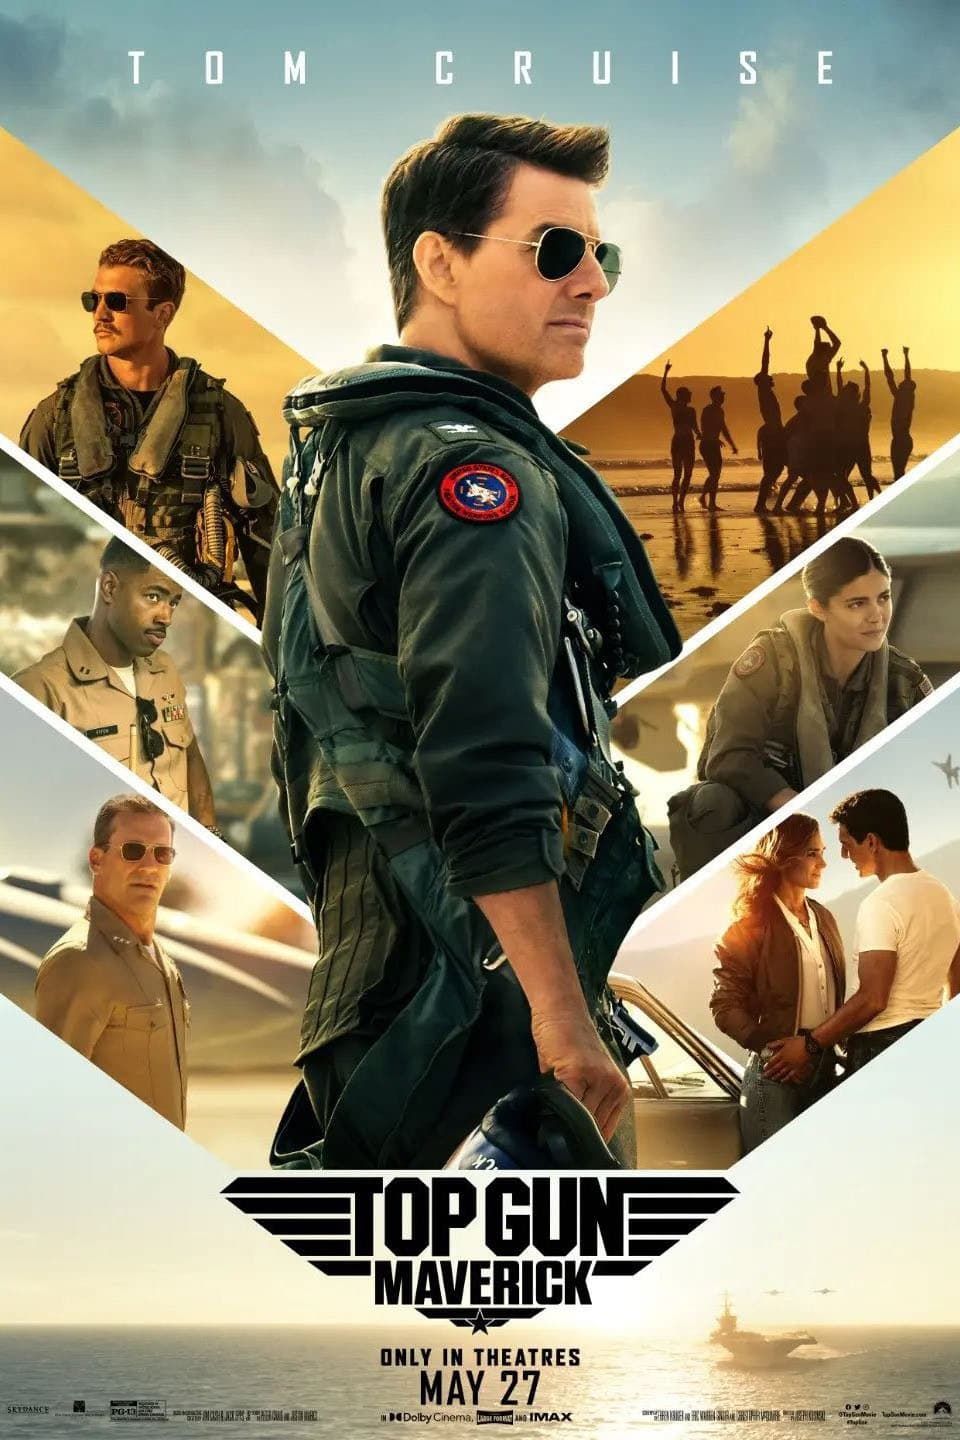 Top Gun Maverick (2022) Hindi Dubbed HDRip download full movie